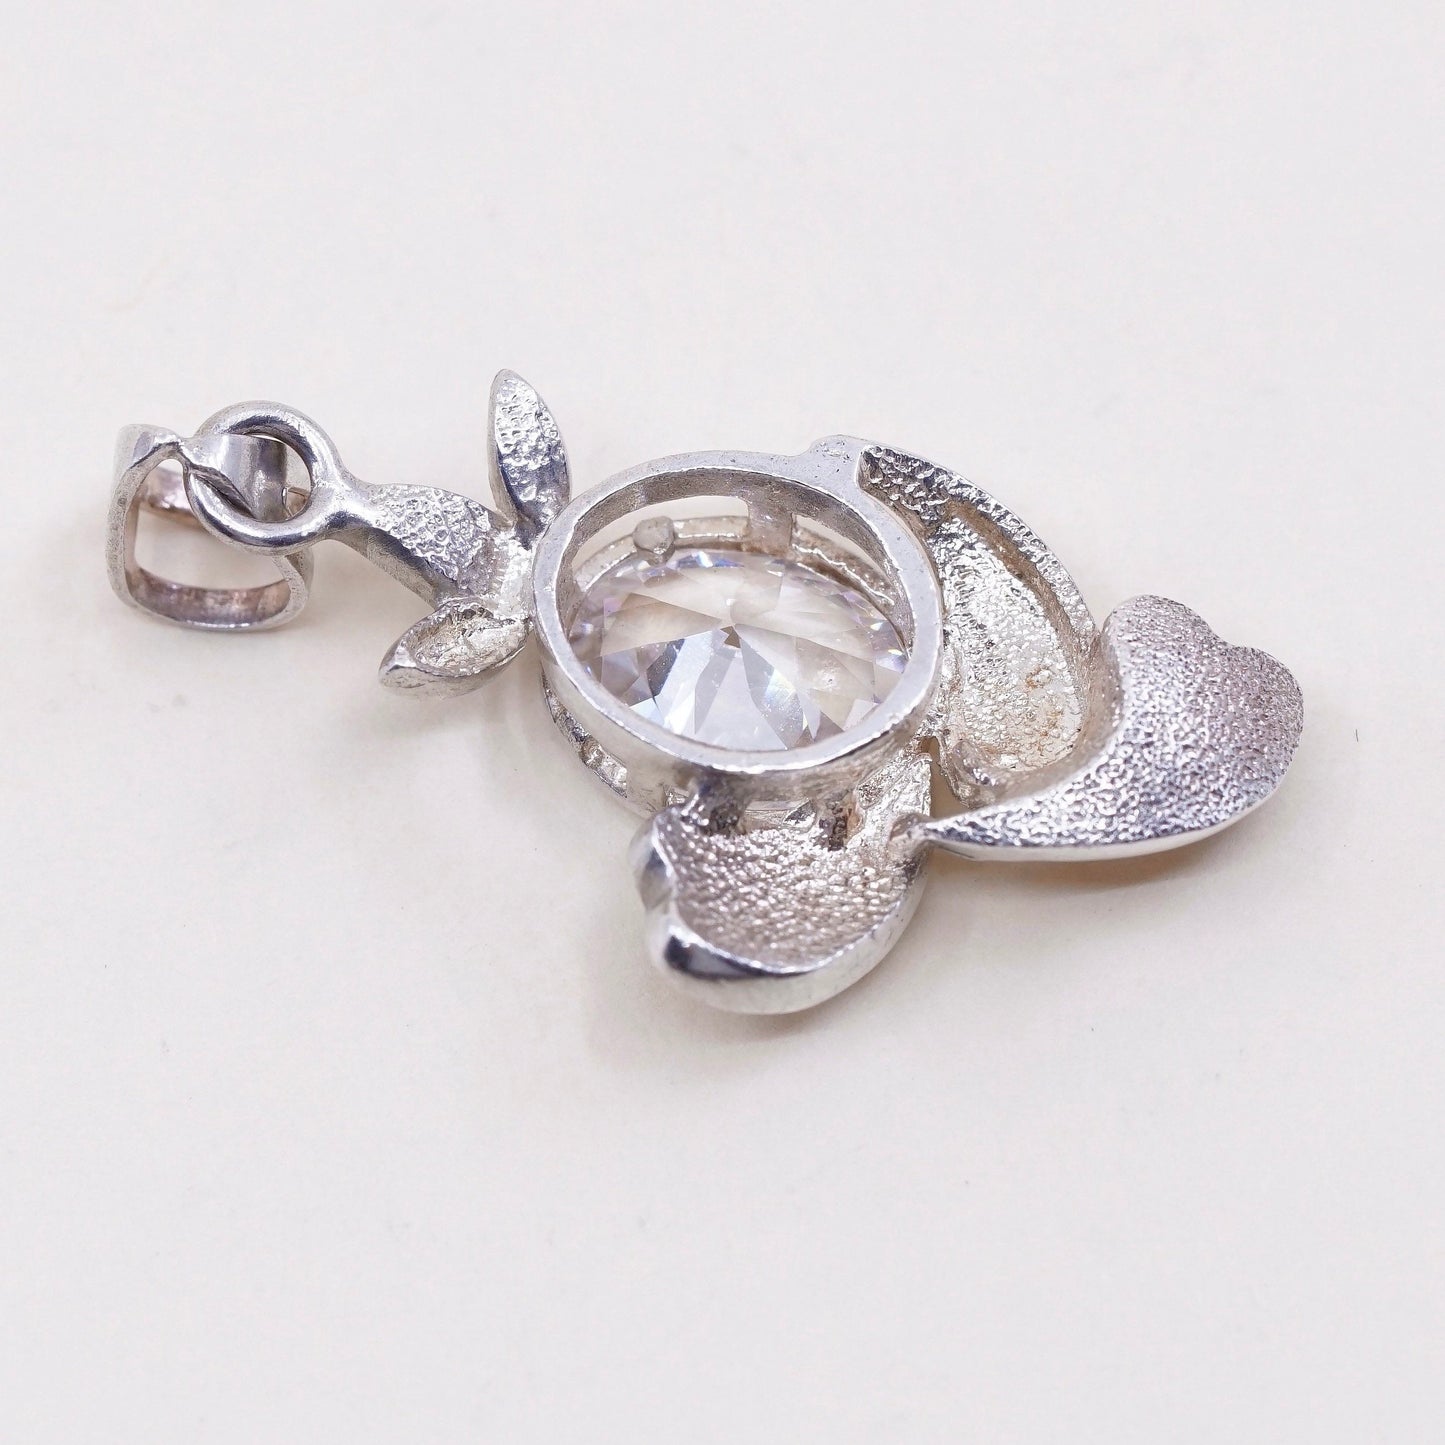 Vintage CCJ sterling silver cz crystal pendant, 925 silver pendant